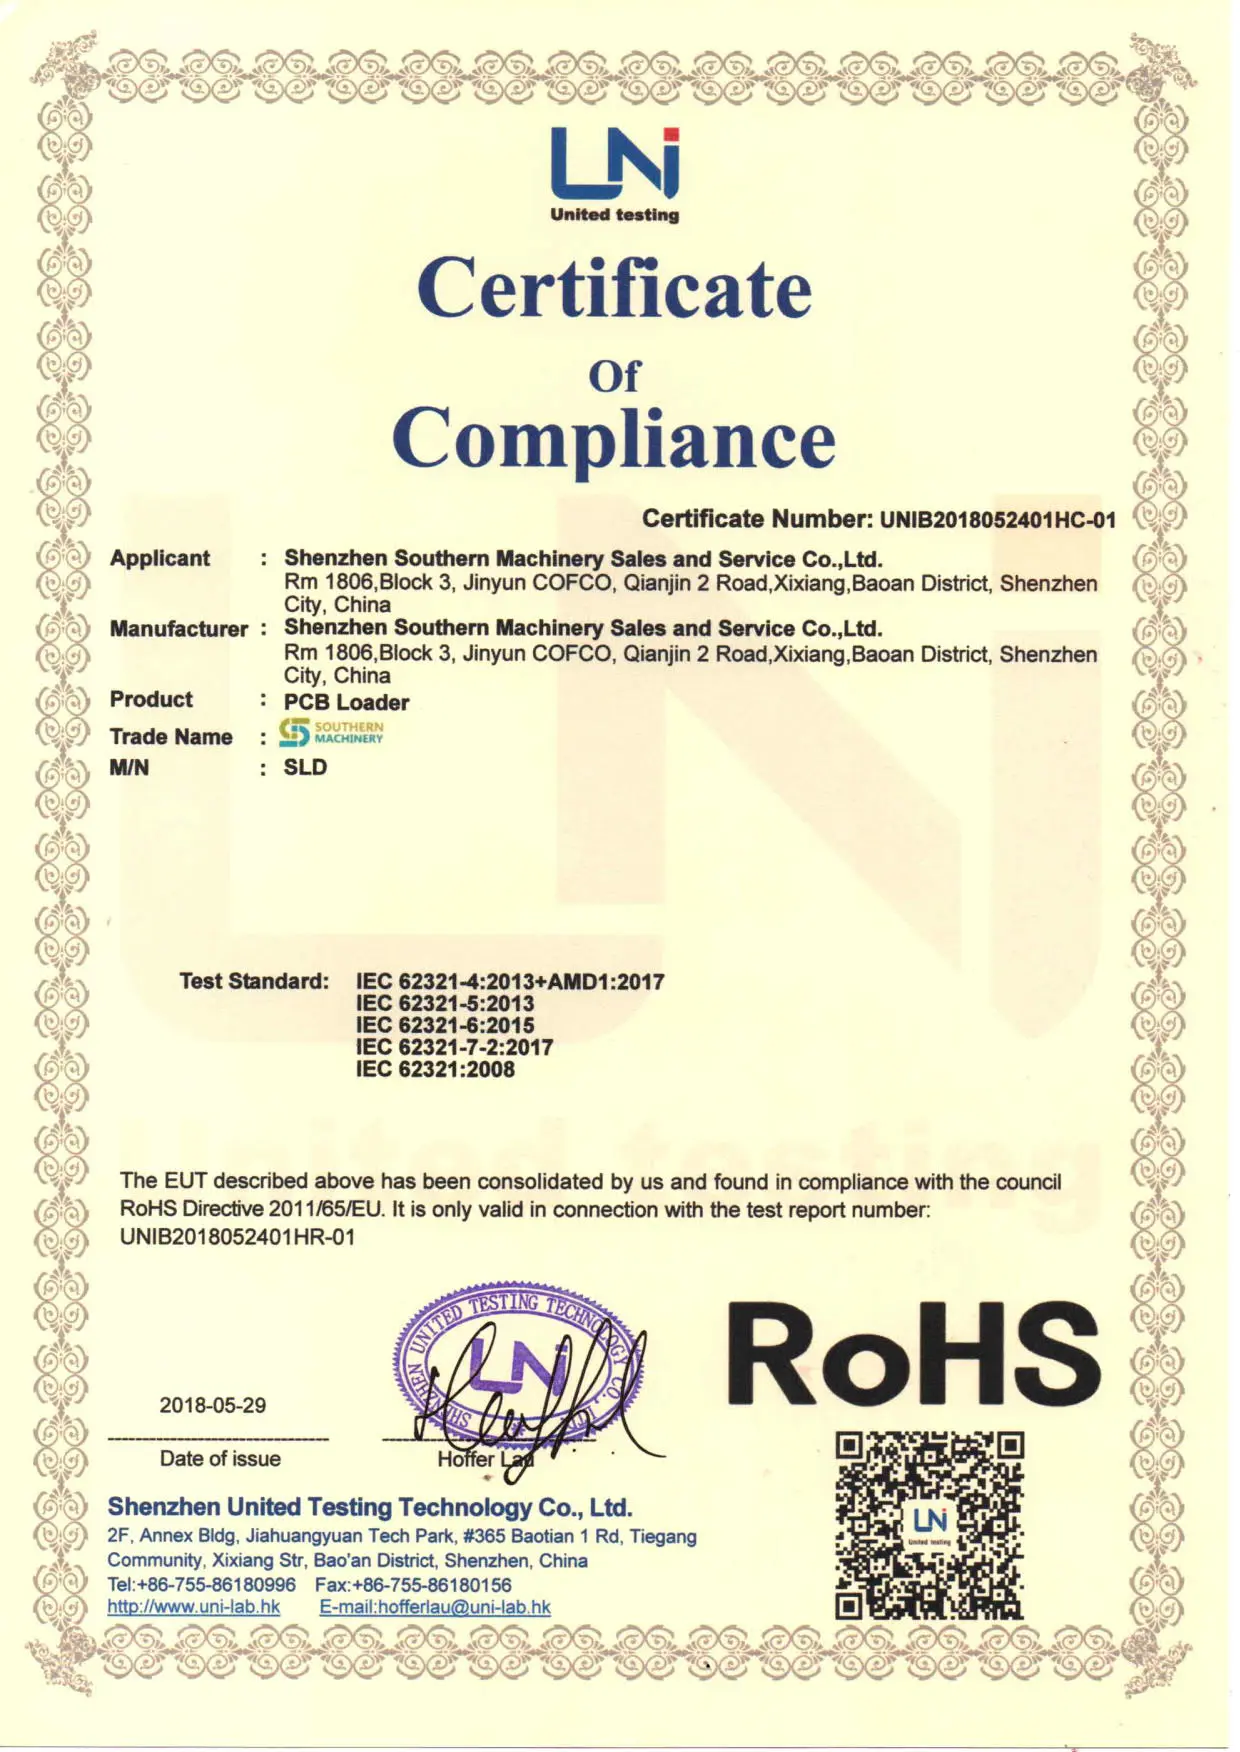 PCB-Loader-Conveyor-ROHS-Certification